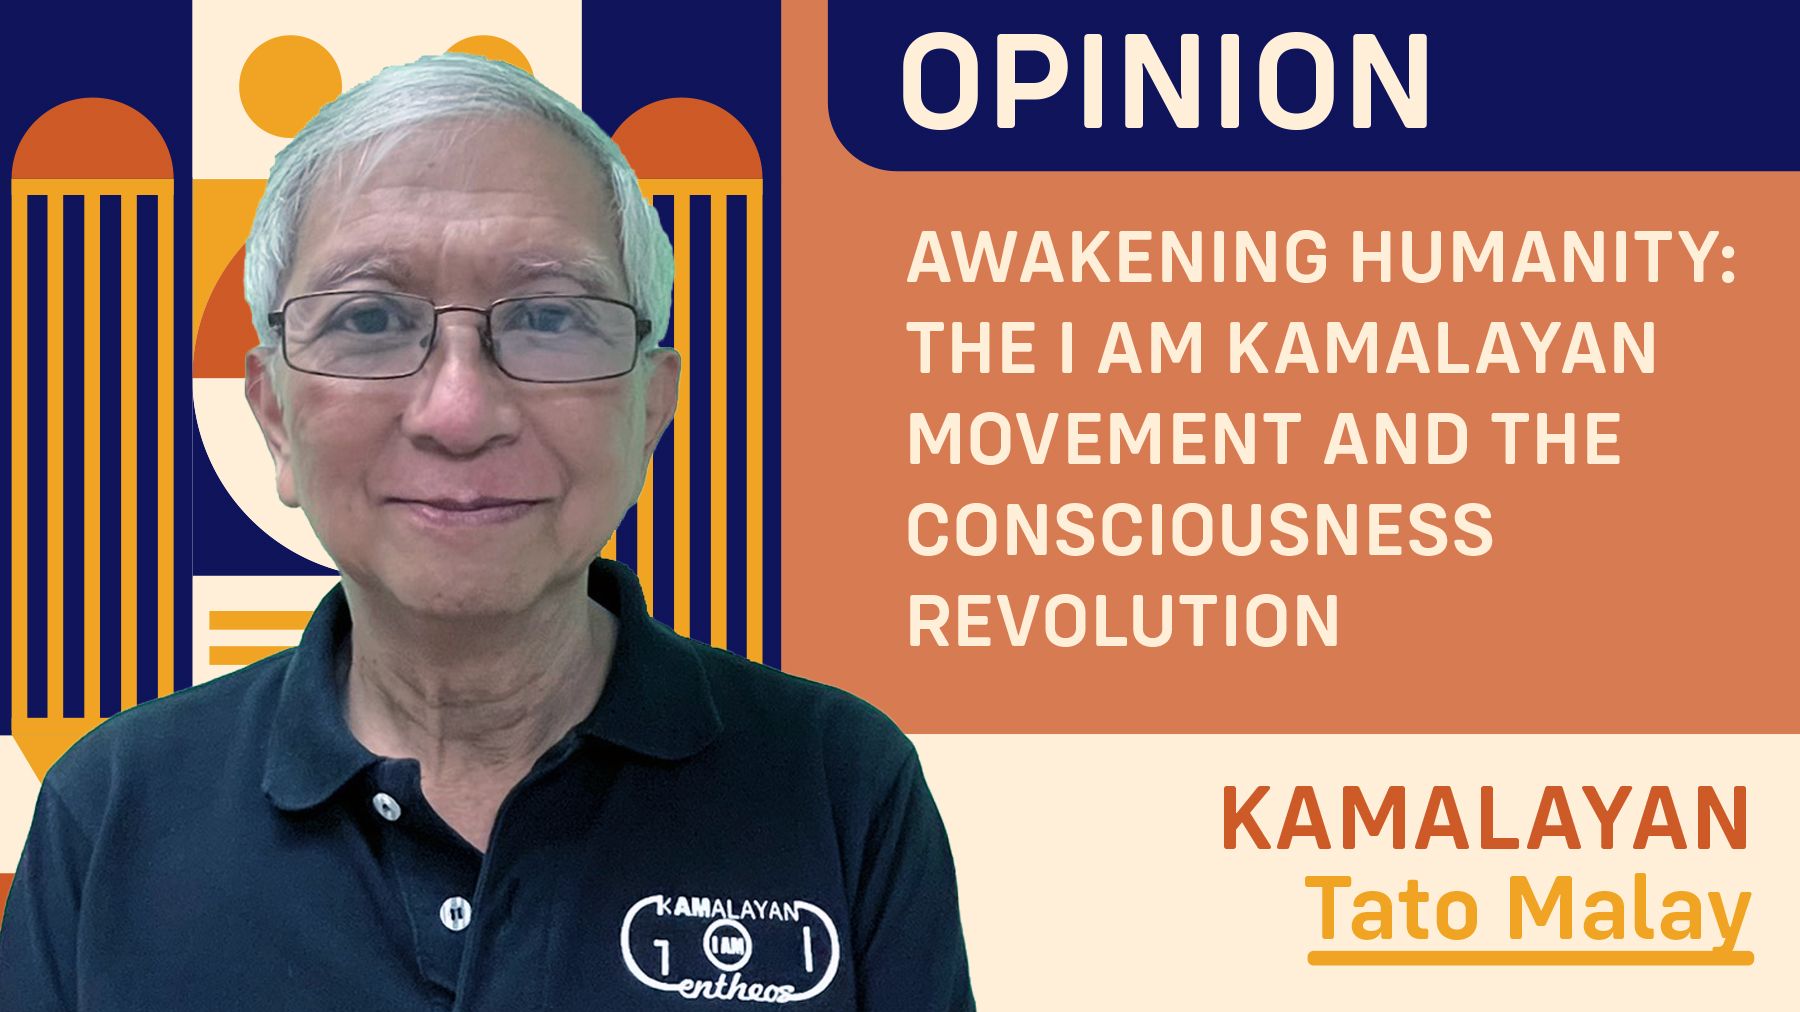 AWAKENING HUMANITY: THE I AM KAMALAYAN MOVEMENT AND THE CONSCIOUSNESS REVOLUTION